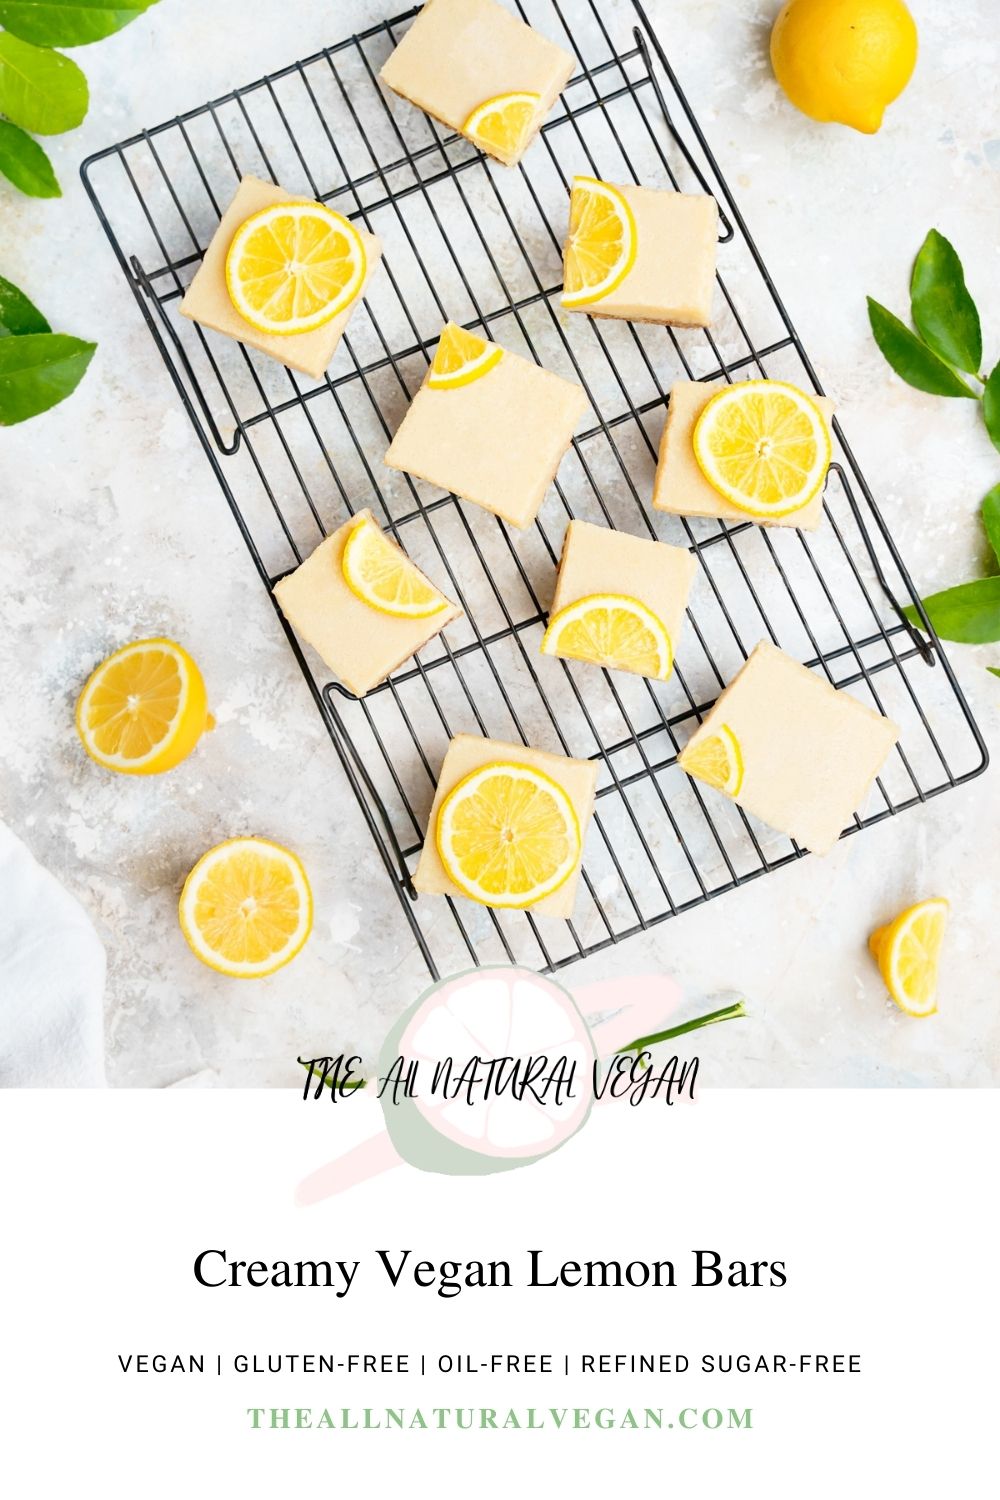 vegan lemon bar recipe cardstating this recipe is oil-free, gluten-free, and refined sugar-free